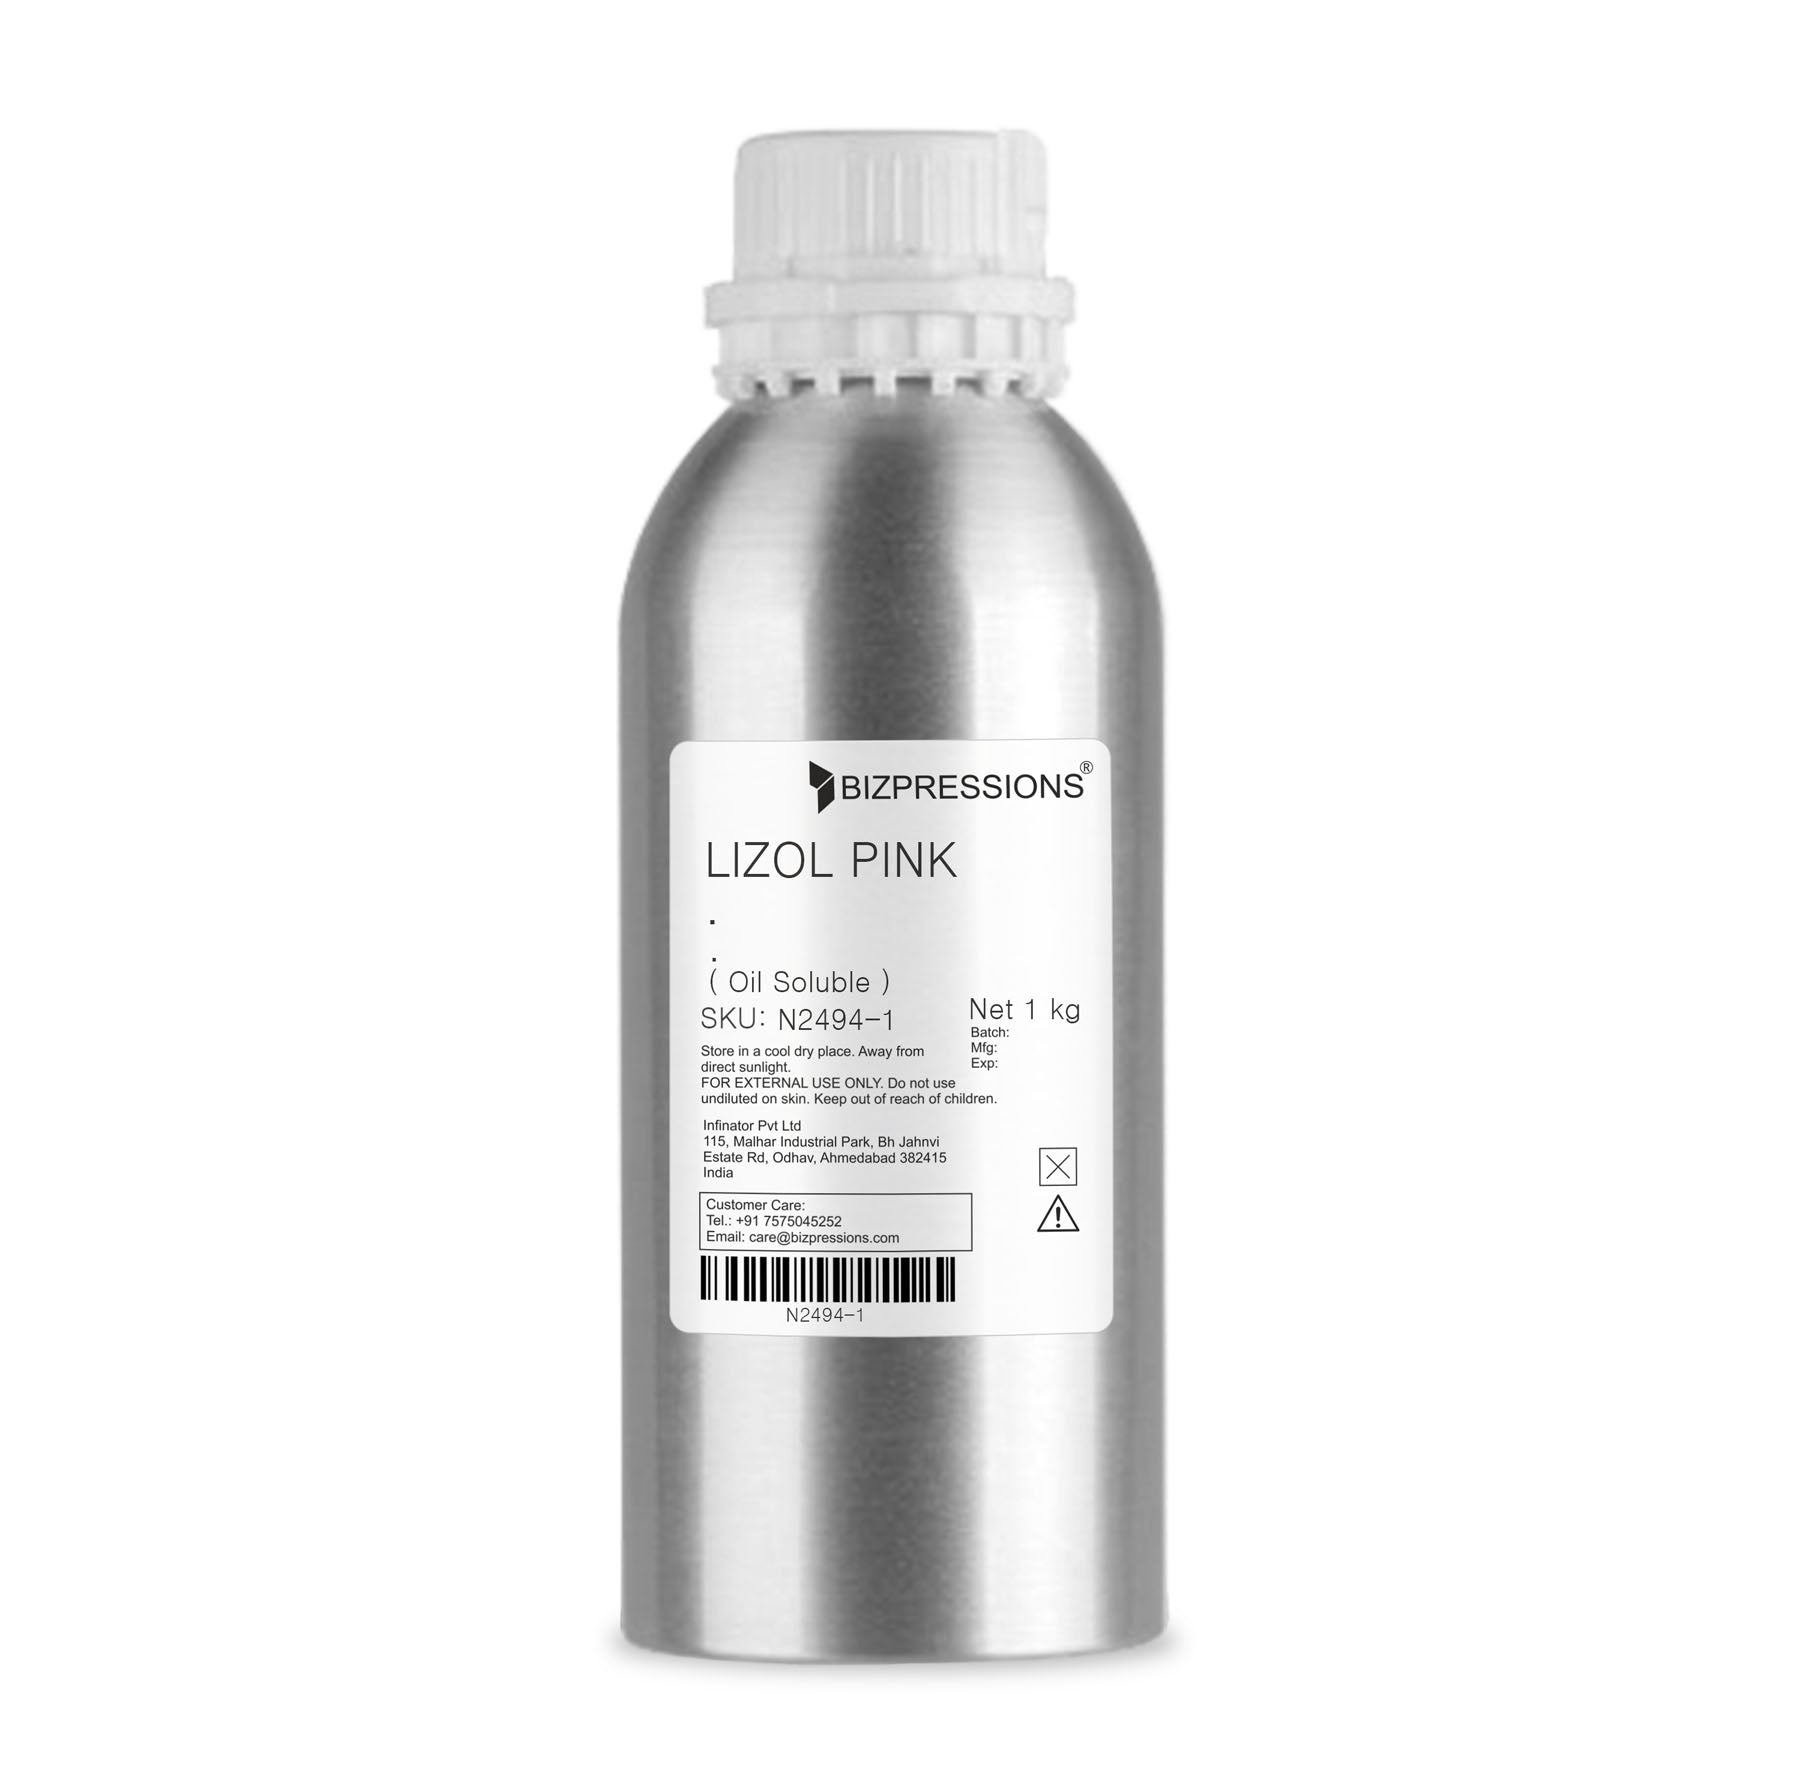 LIZOL PINK - Fragrance ( Oil Soluble ) - 1 kg